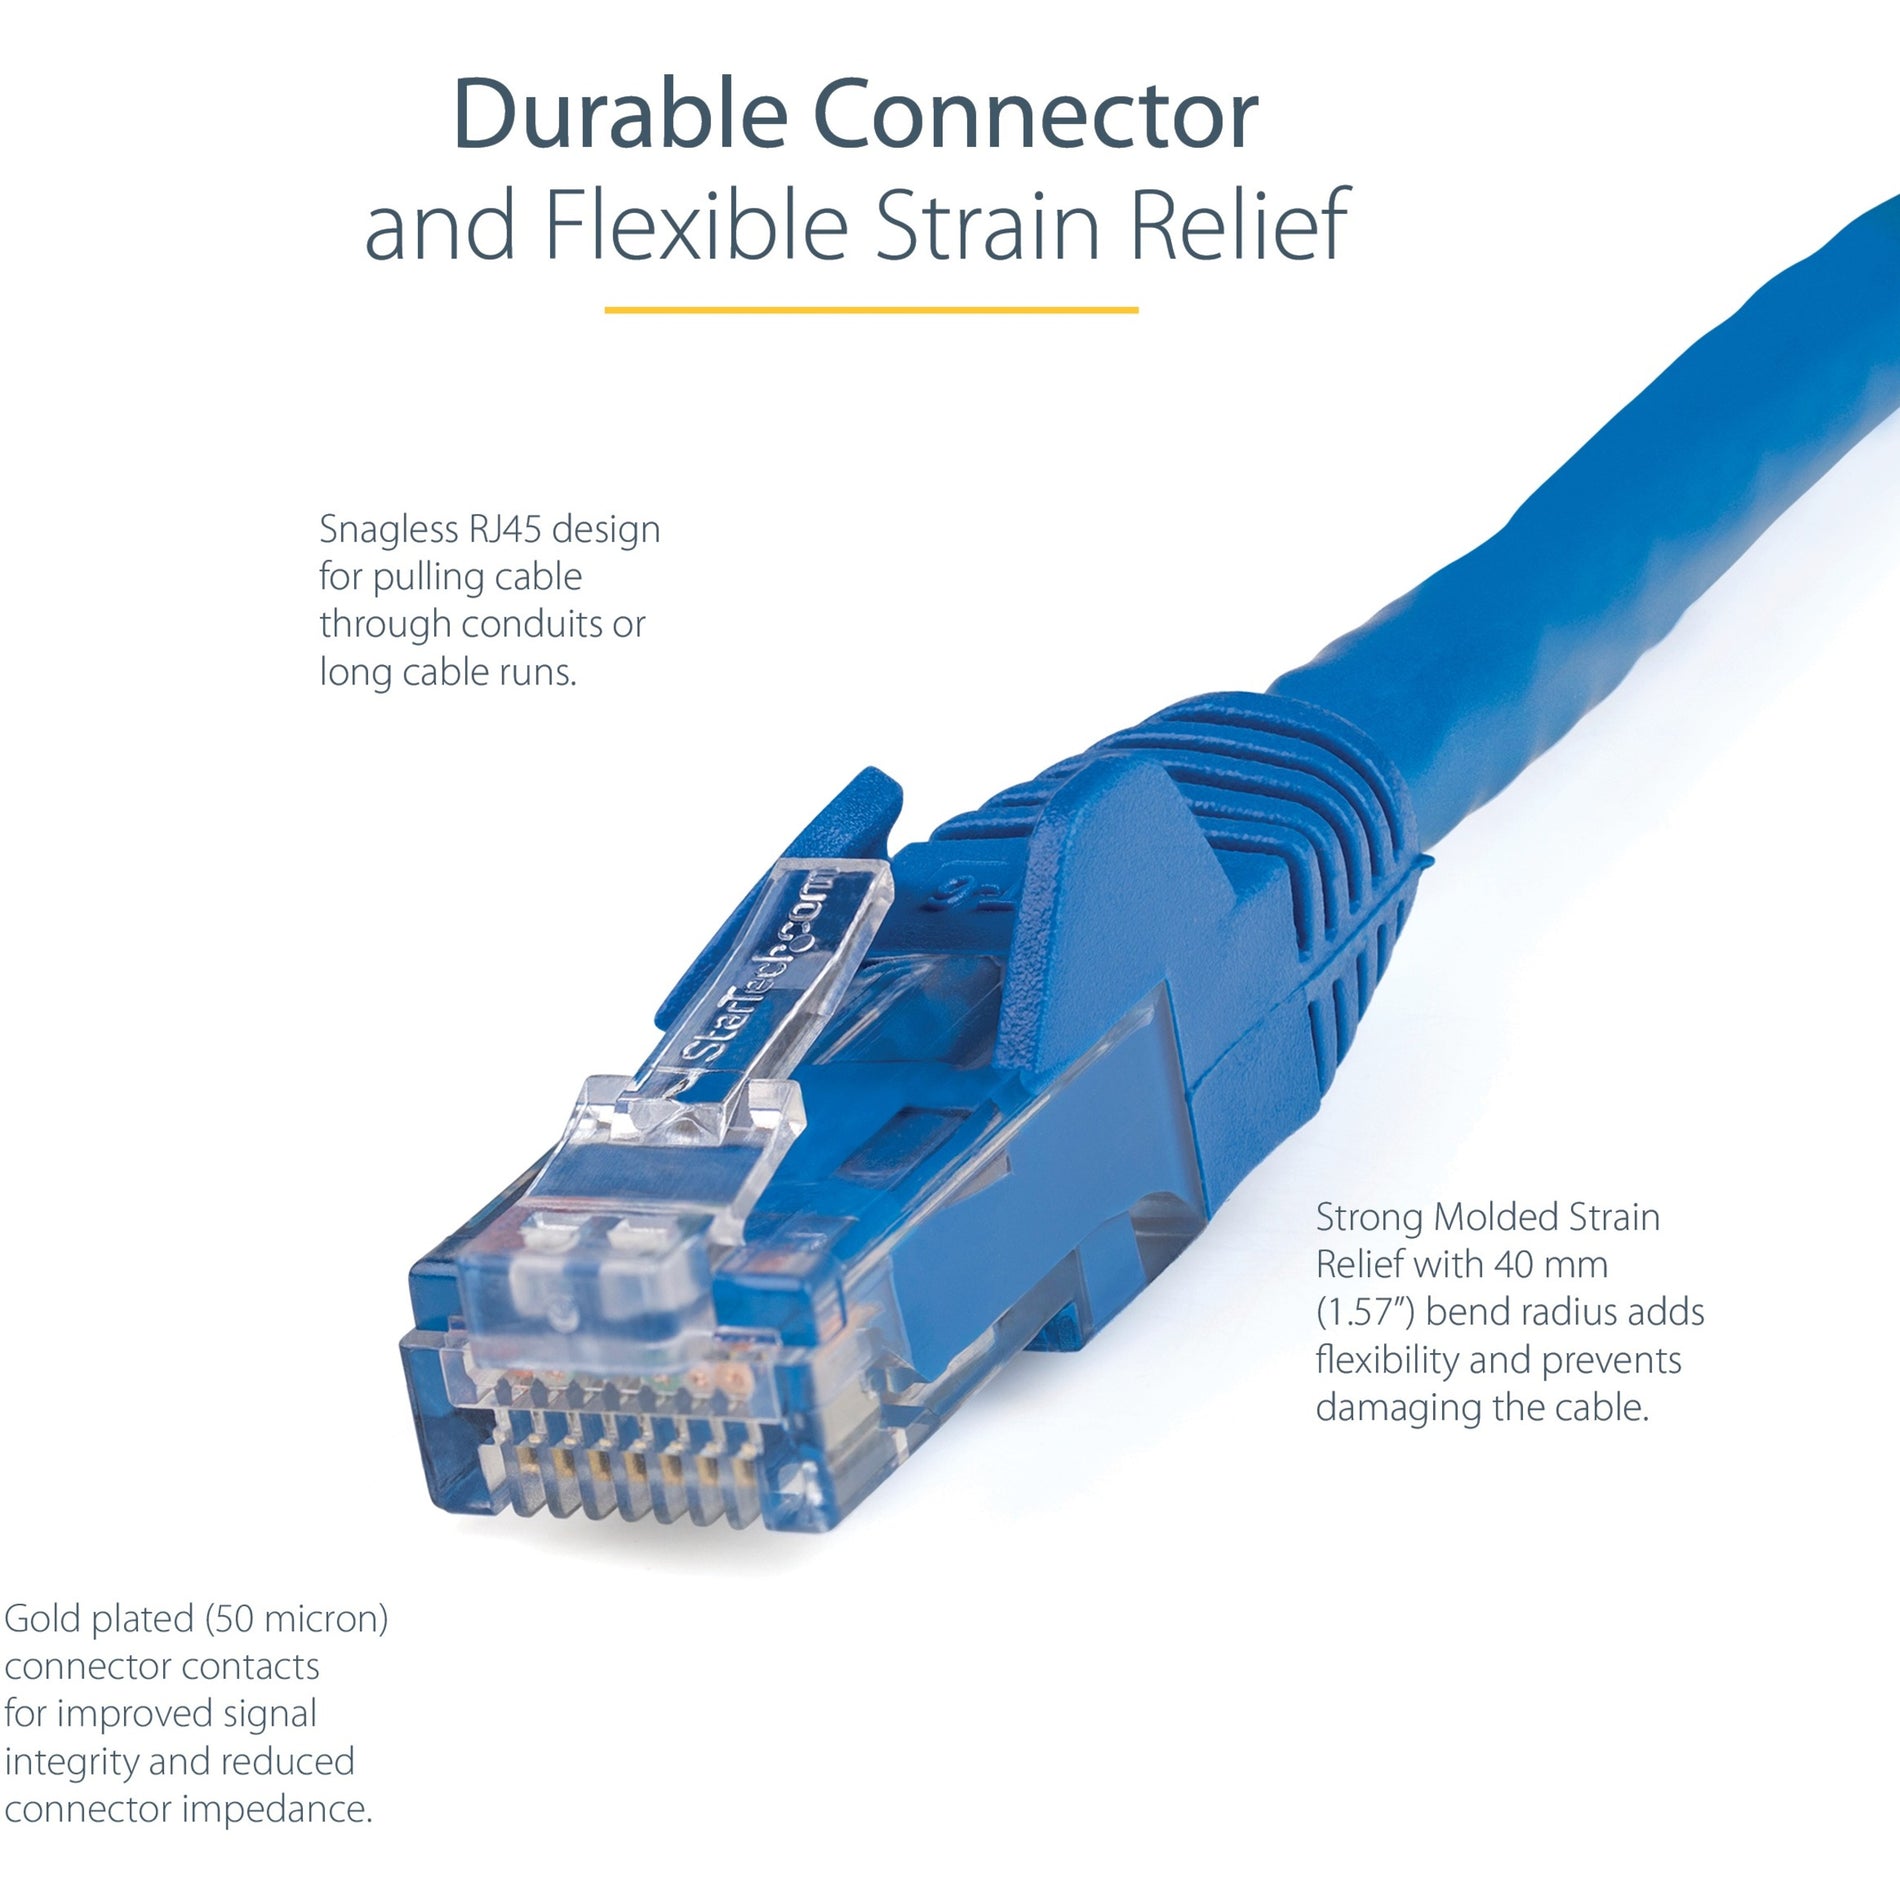 StarTech.com N6PATCH100BL 100 ft Blue Snagless Cat6 UTP Patch Cable, Lifetime Warranty, 10 Gbit/s Data Transfer Rate, PoE